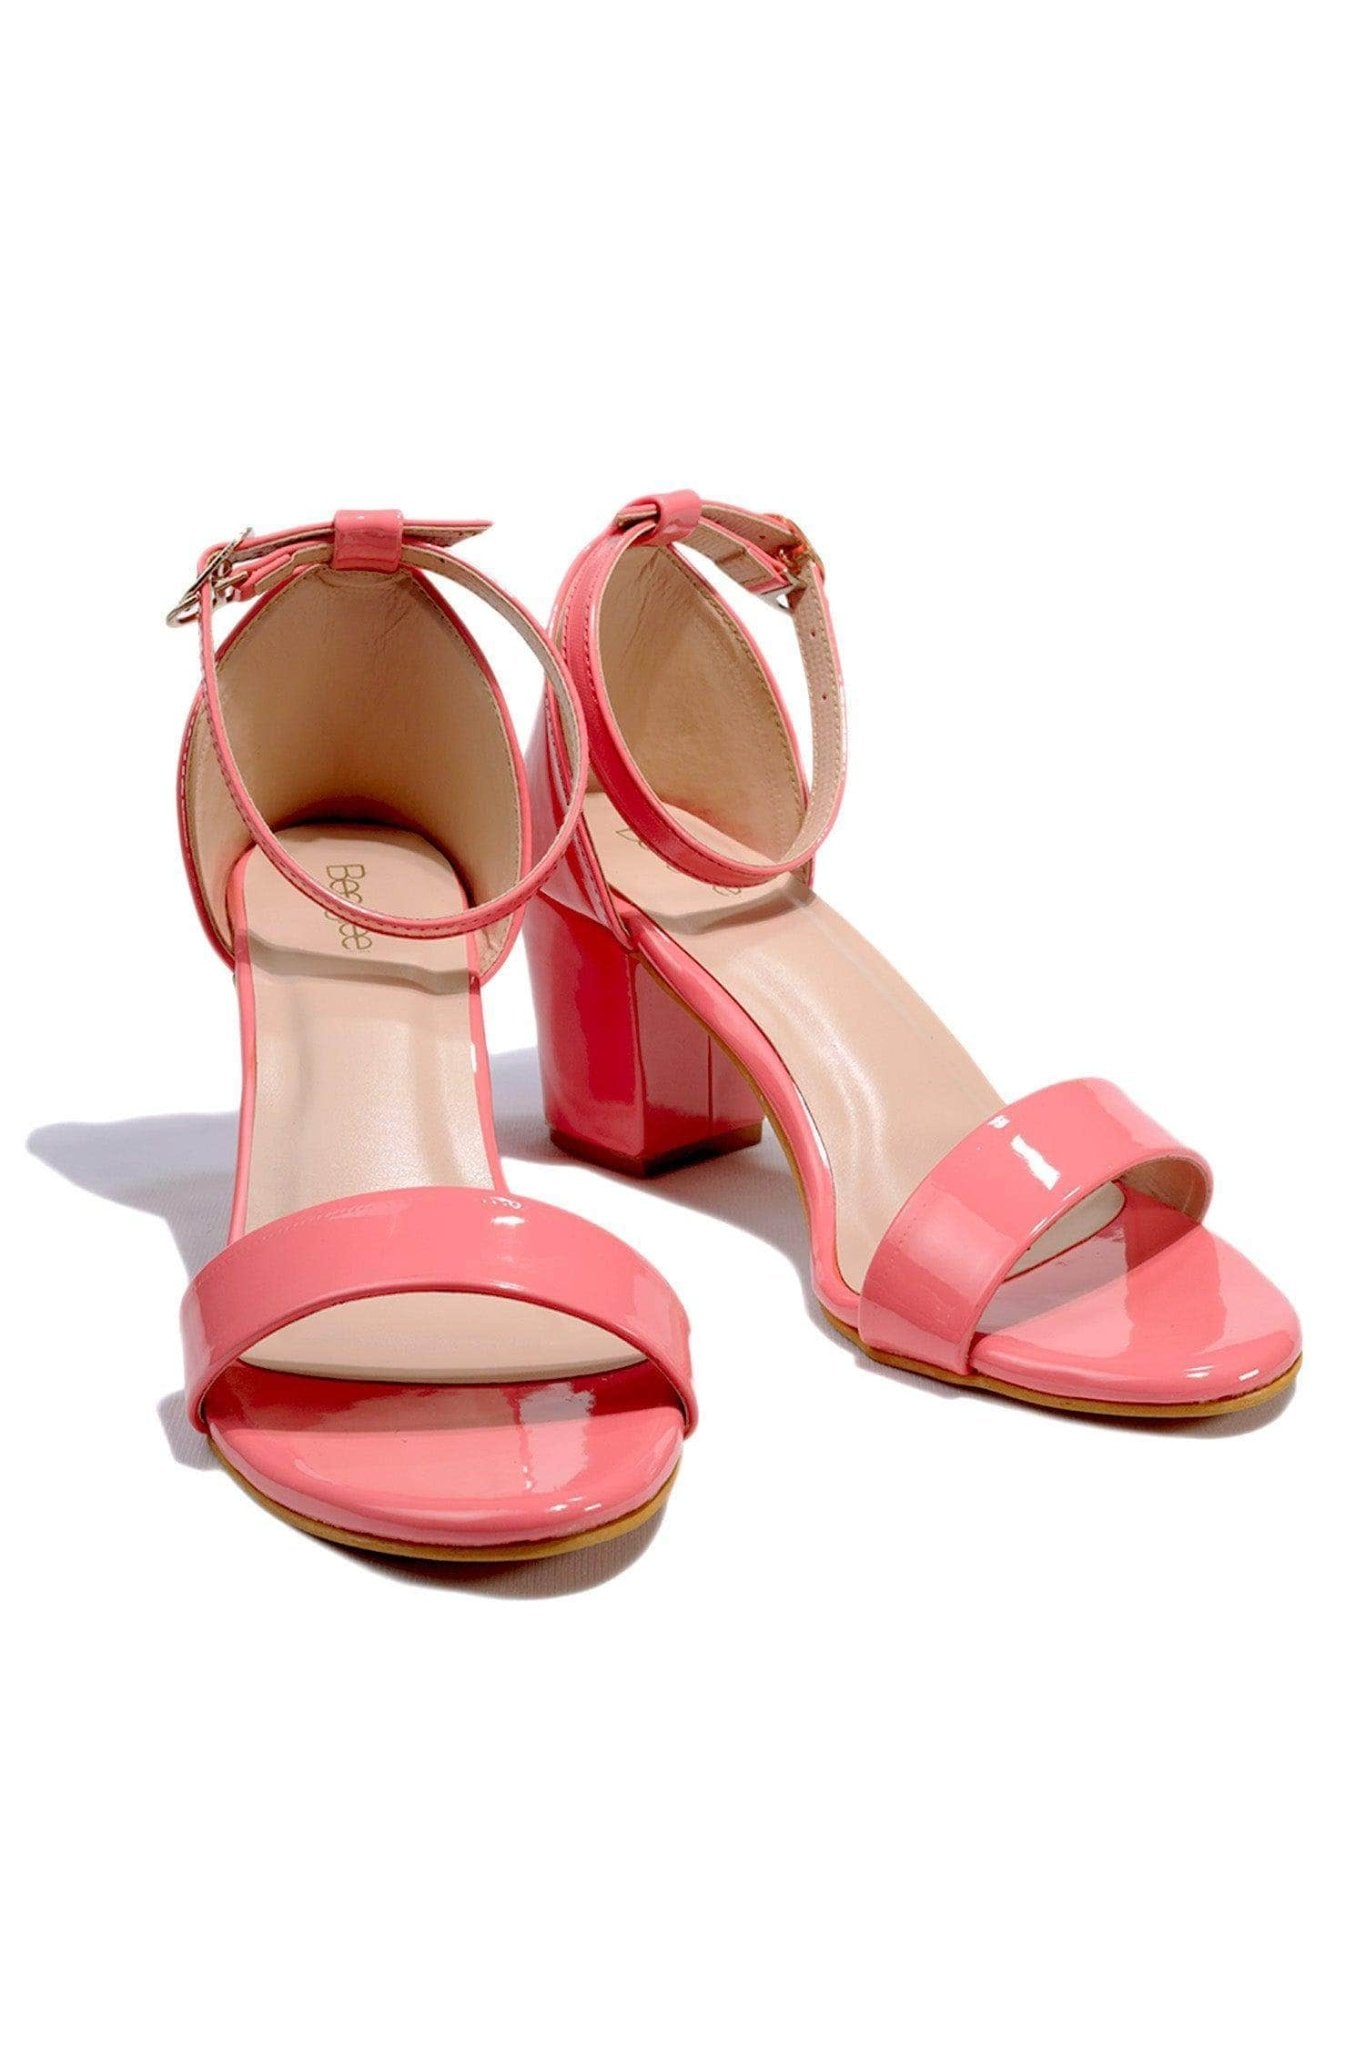 Peach Pink Patent Heels With Buckle Closure - BEEGLEE